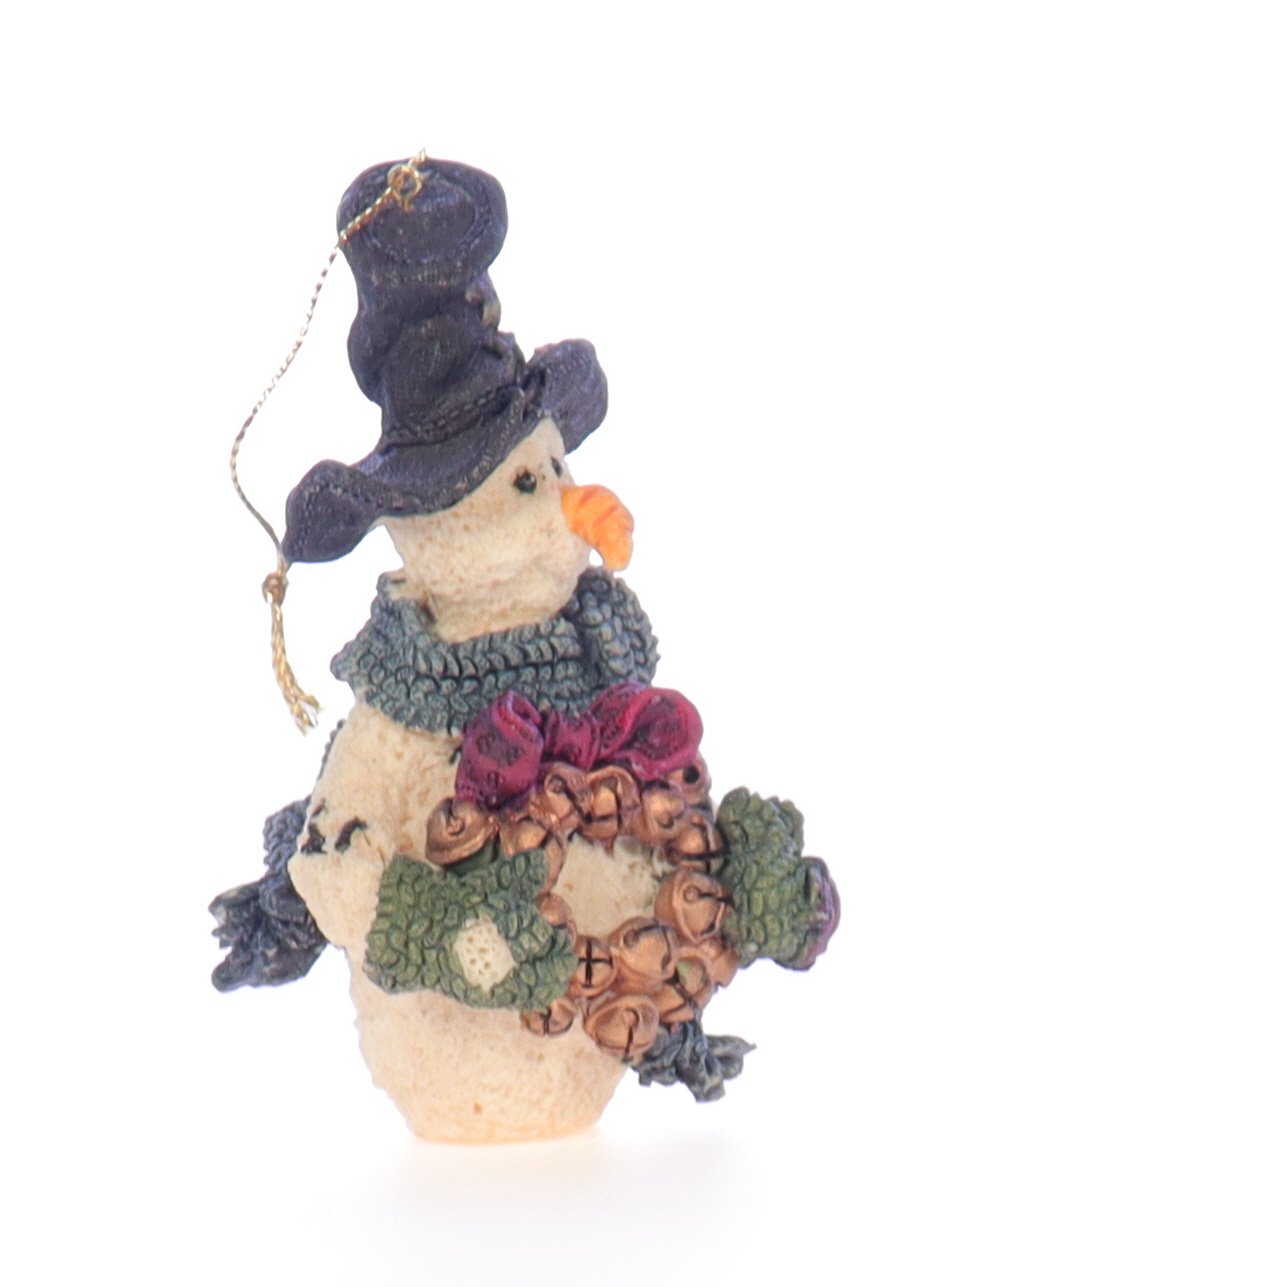 Boyds_Bears_Folkstone_Resin_Figurine_Ornament_Jingles_the_Snowman_with_Wreath_2562_08